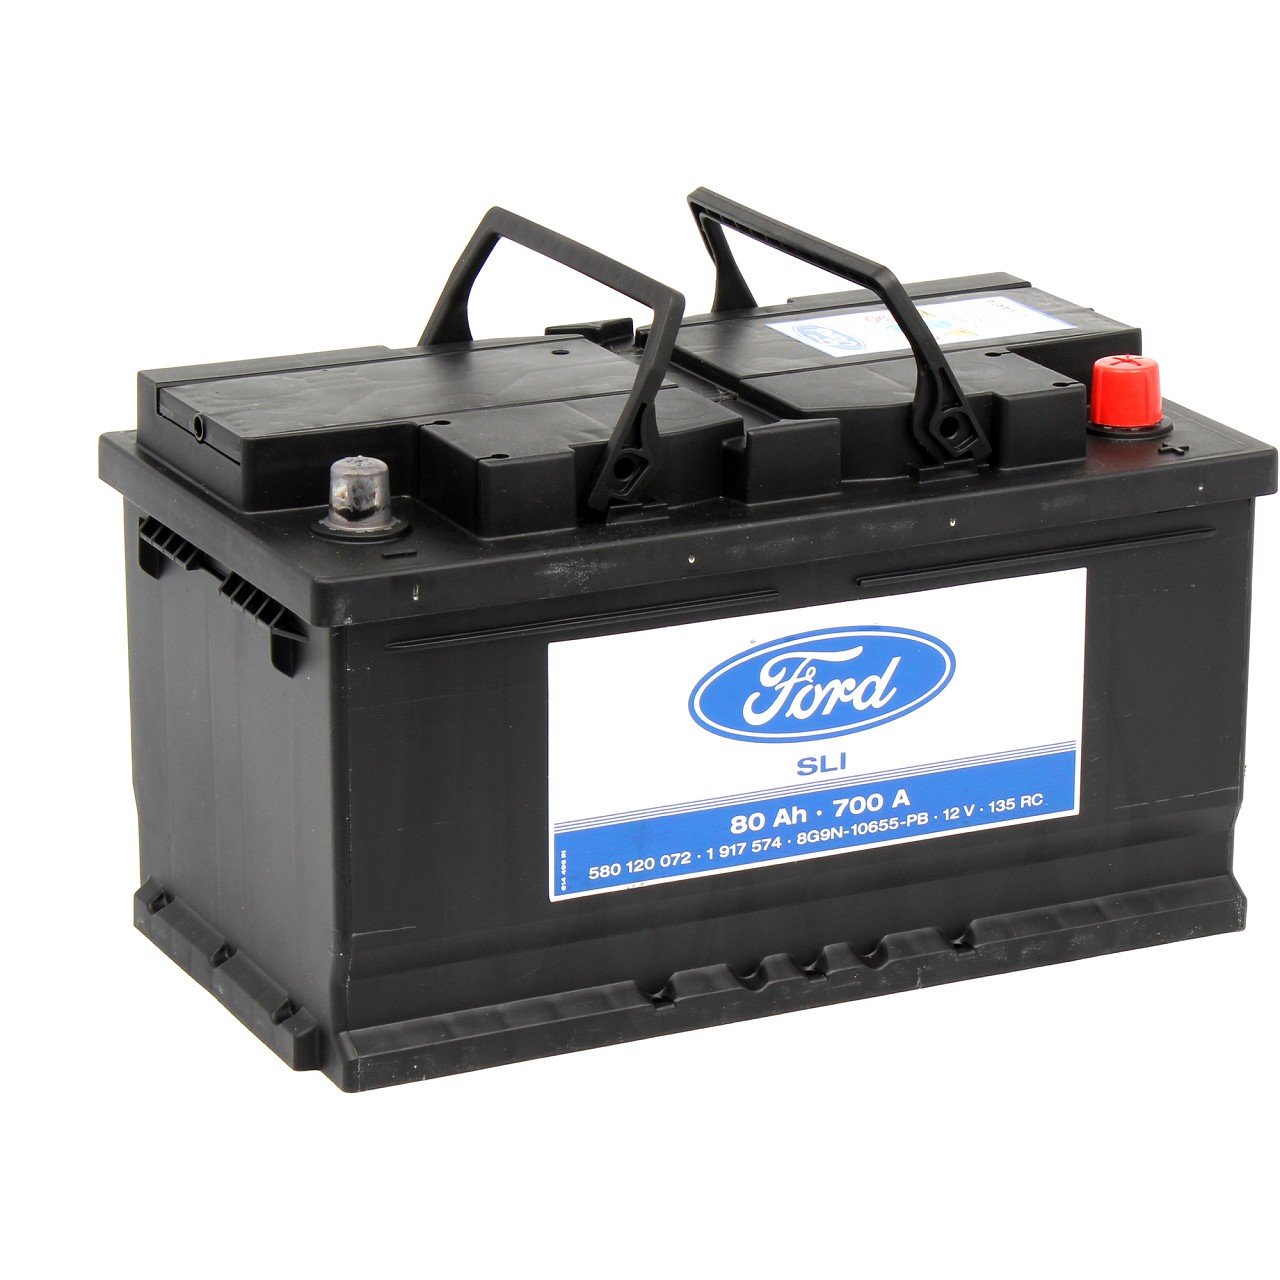 ORIGINAL Ford Autobatterie Batterie Starterbatterie 12V 80Ah 700A 1917574